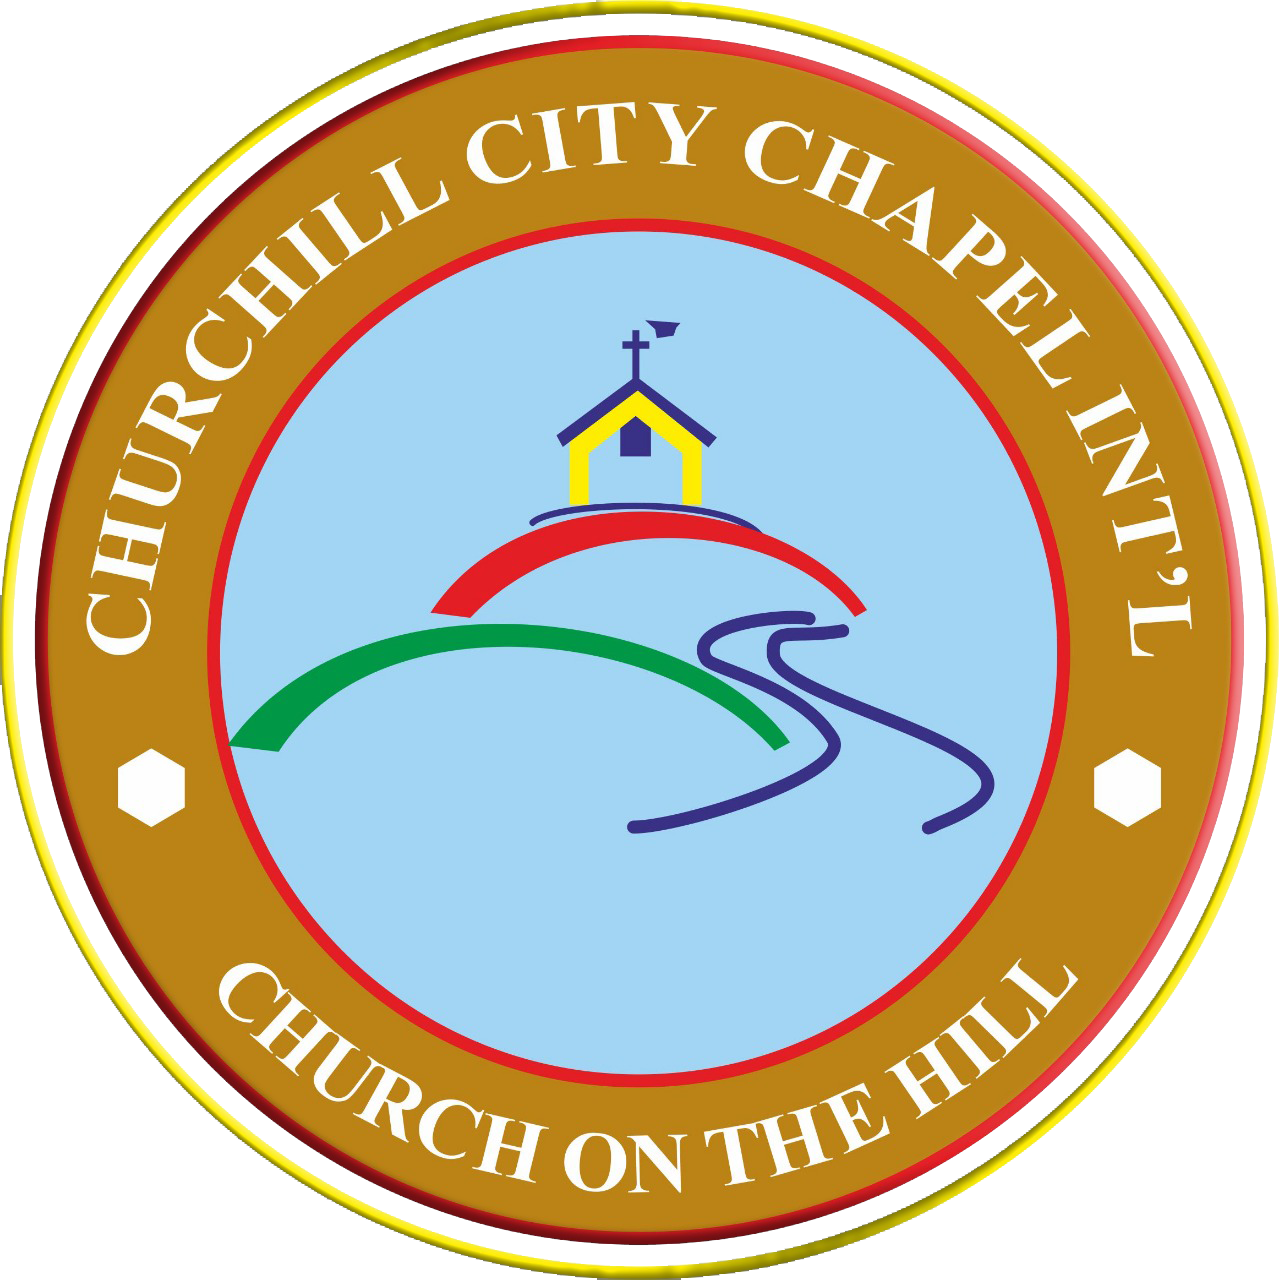 Churchill City Chapel